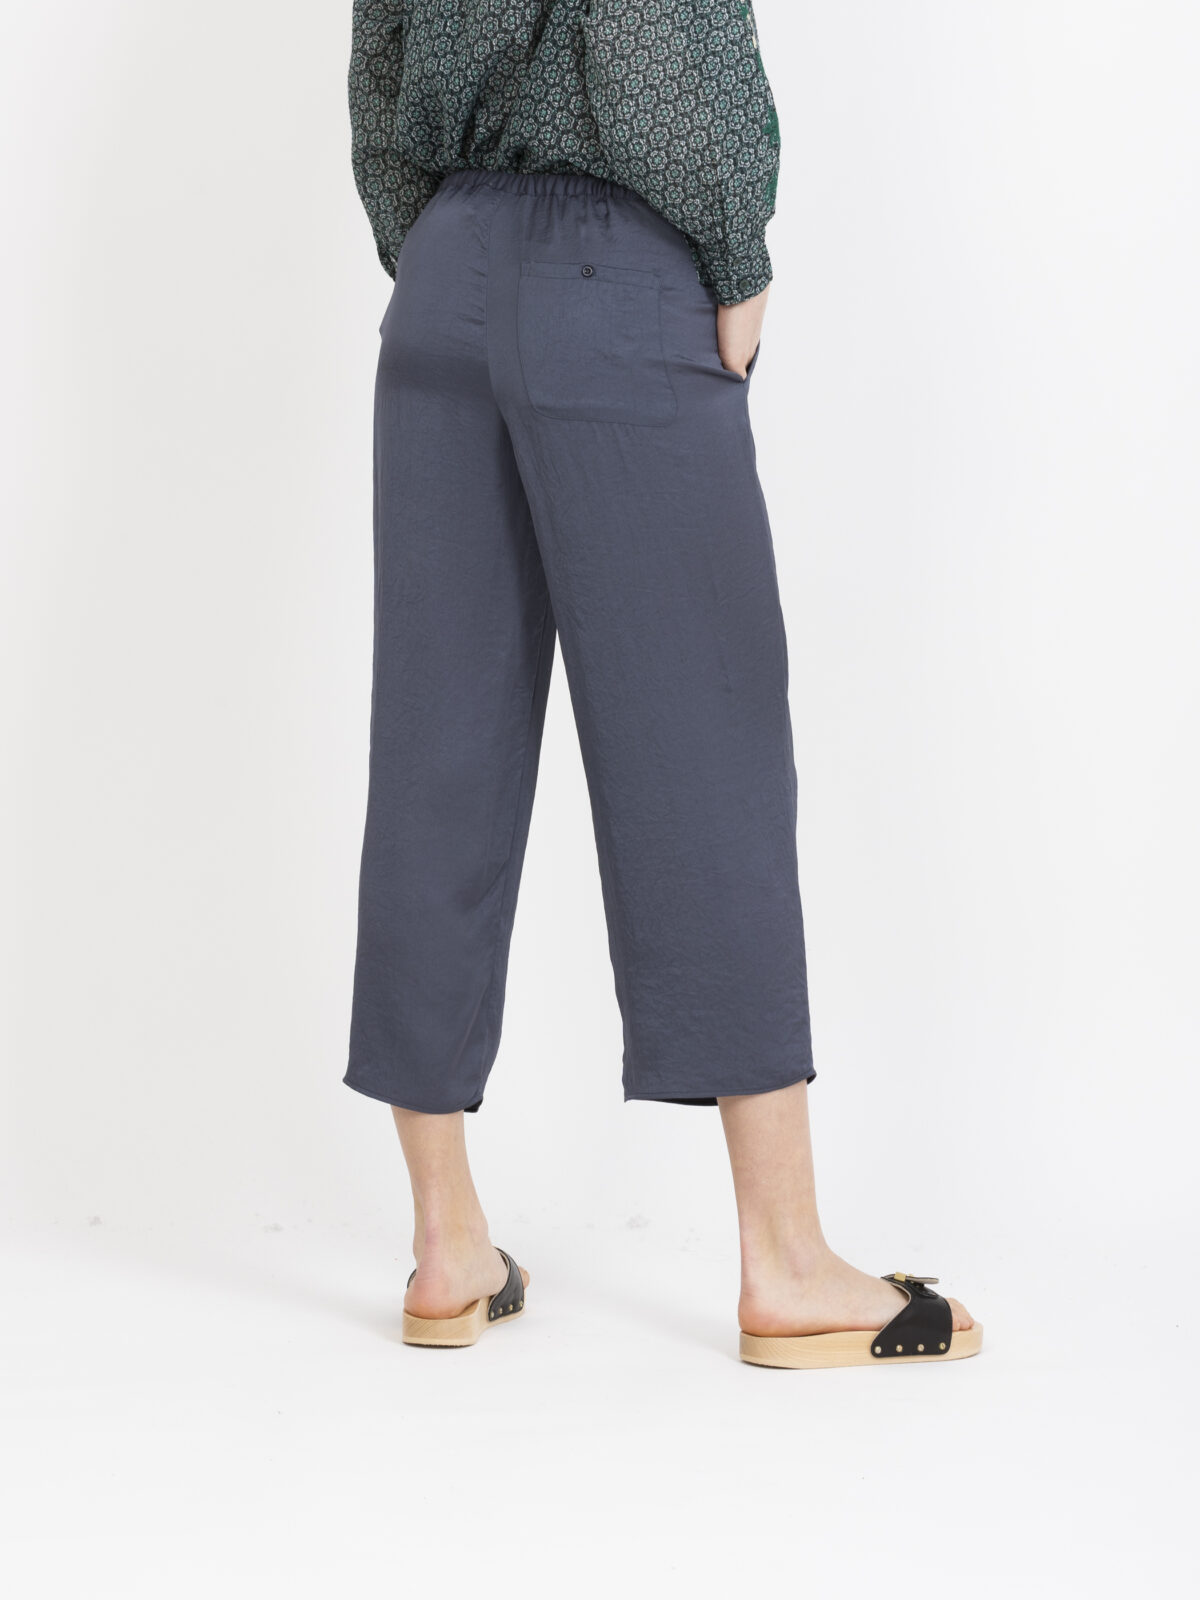 widland-grey-trousers-acetate-cropped-pants-american-vintage-matchboxathens